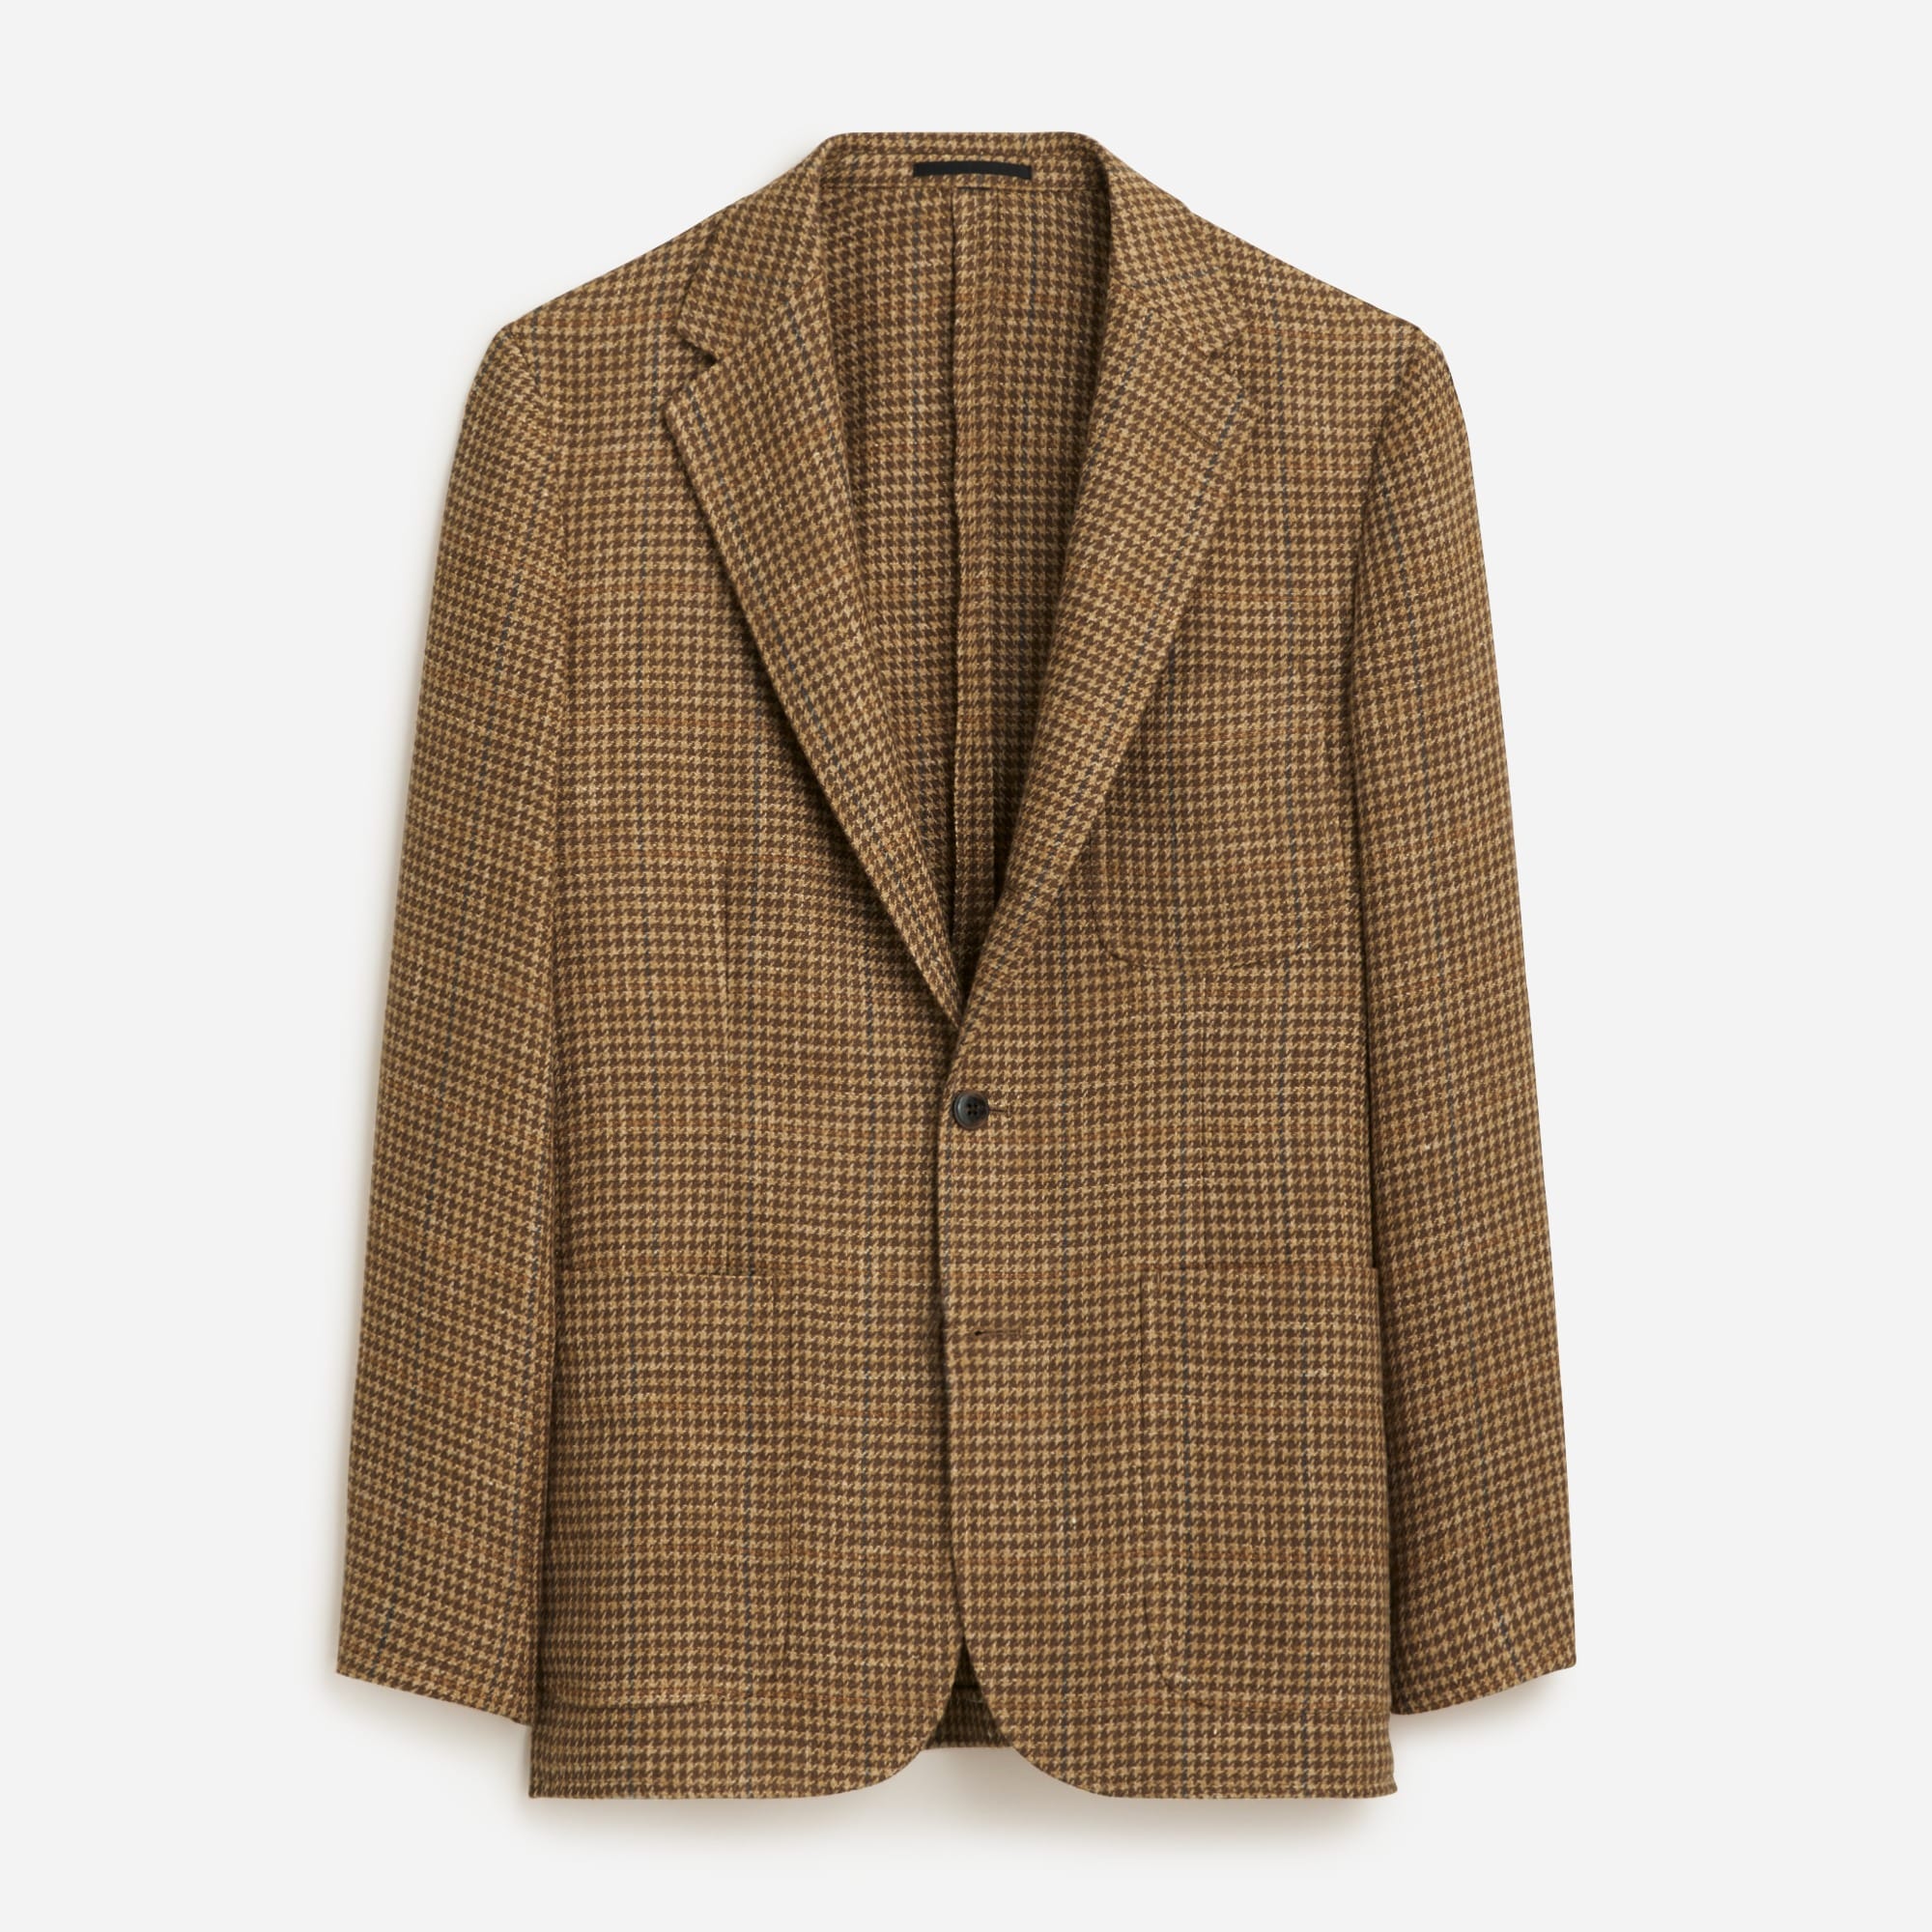  Crosby Classic-fit blazer in linen-blend tweed